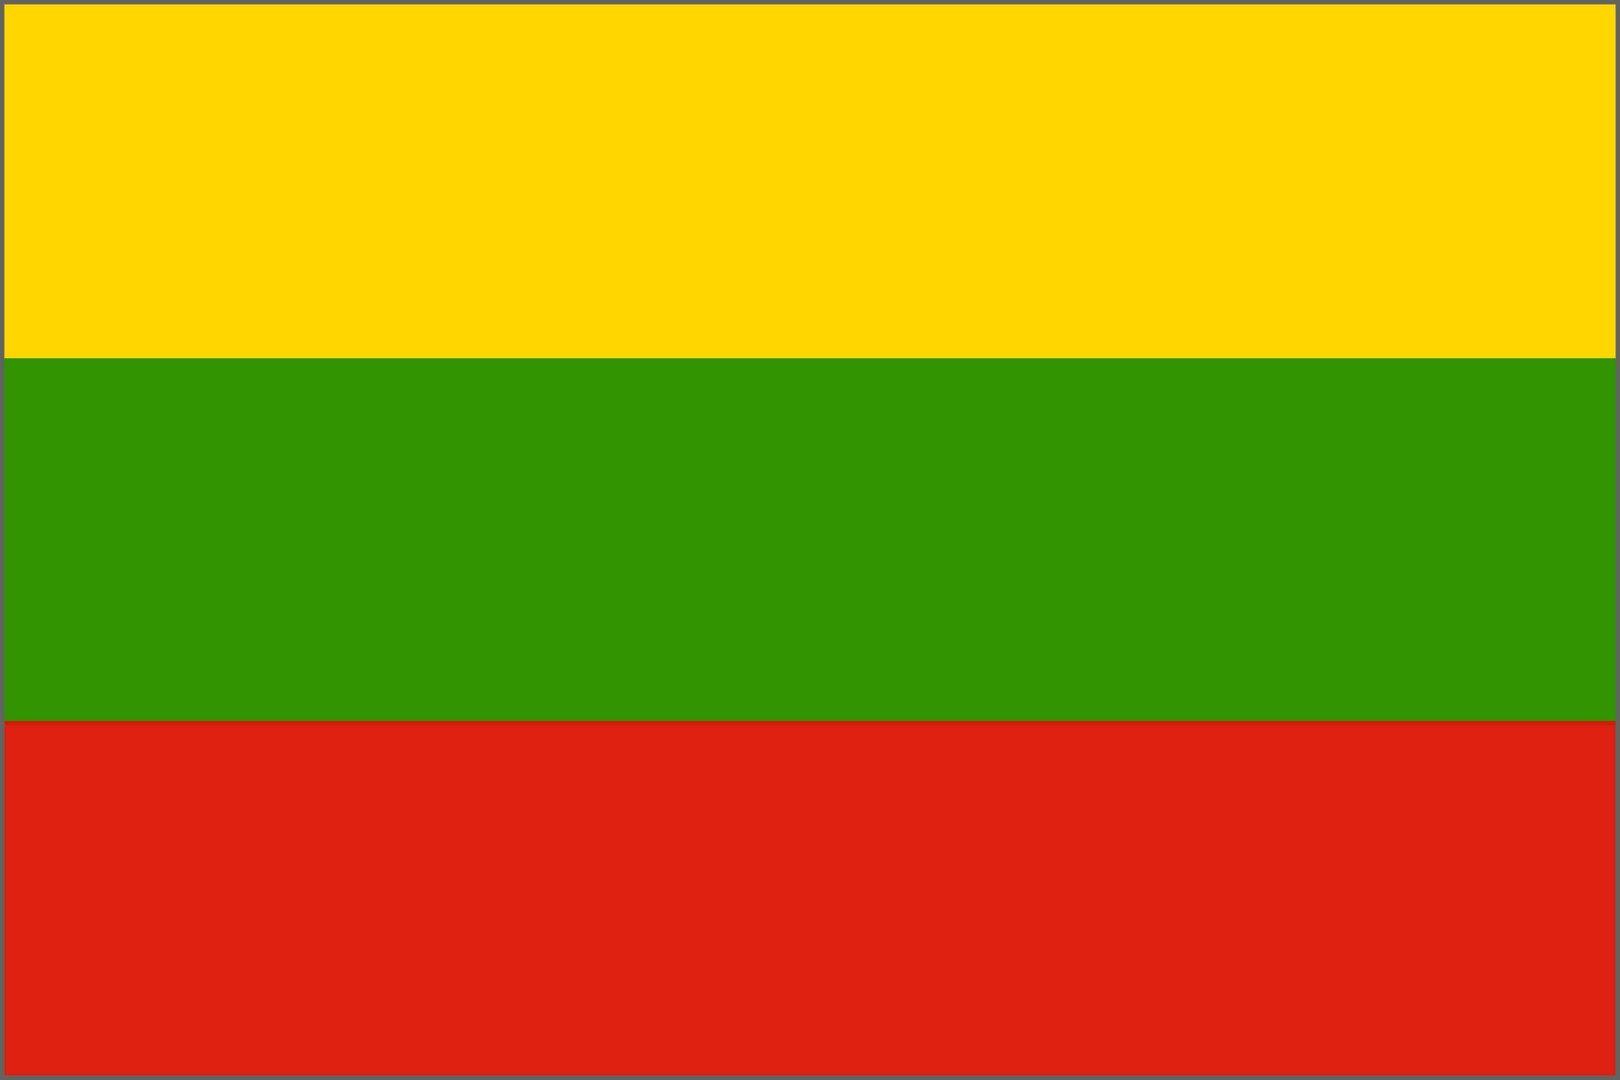 Flag of Lithuania wallpaper. Flags wallpaper